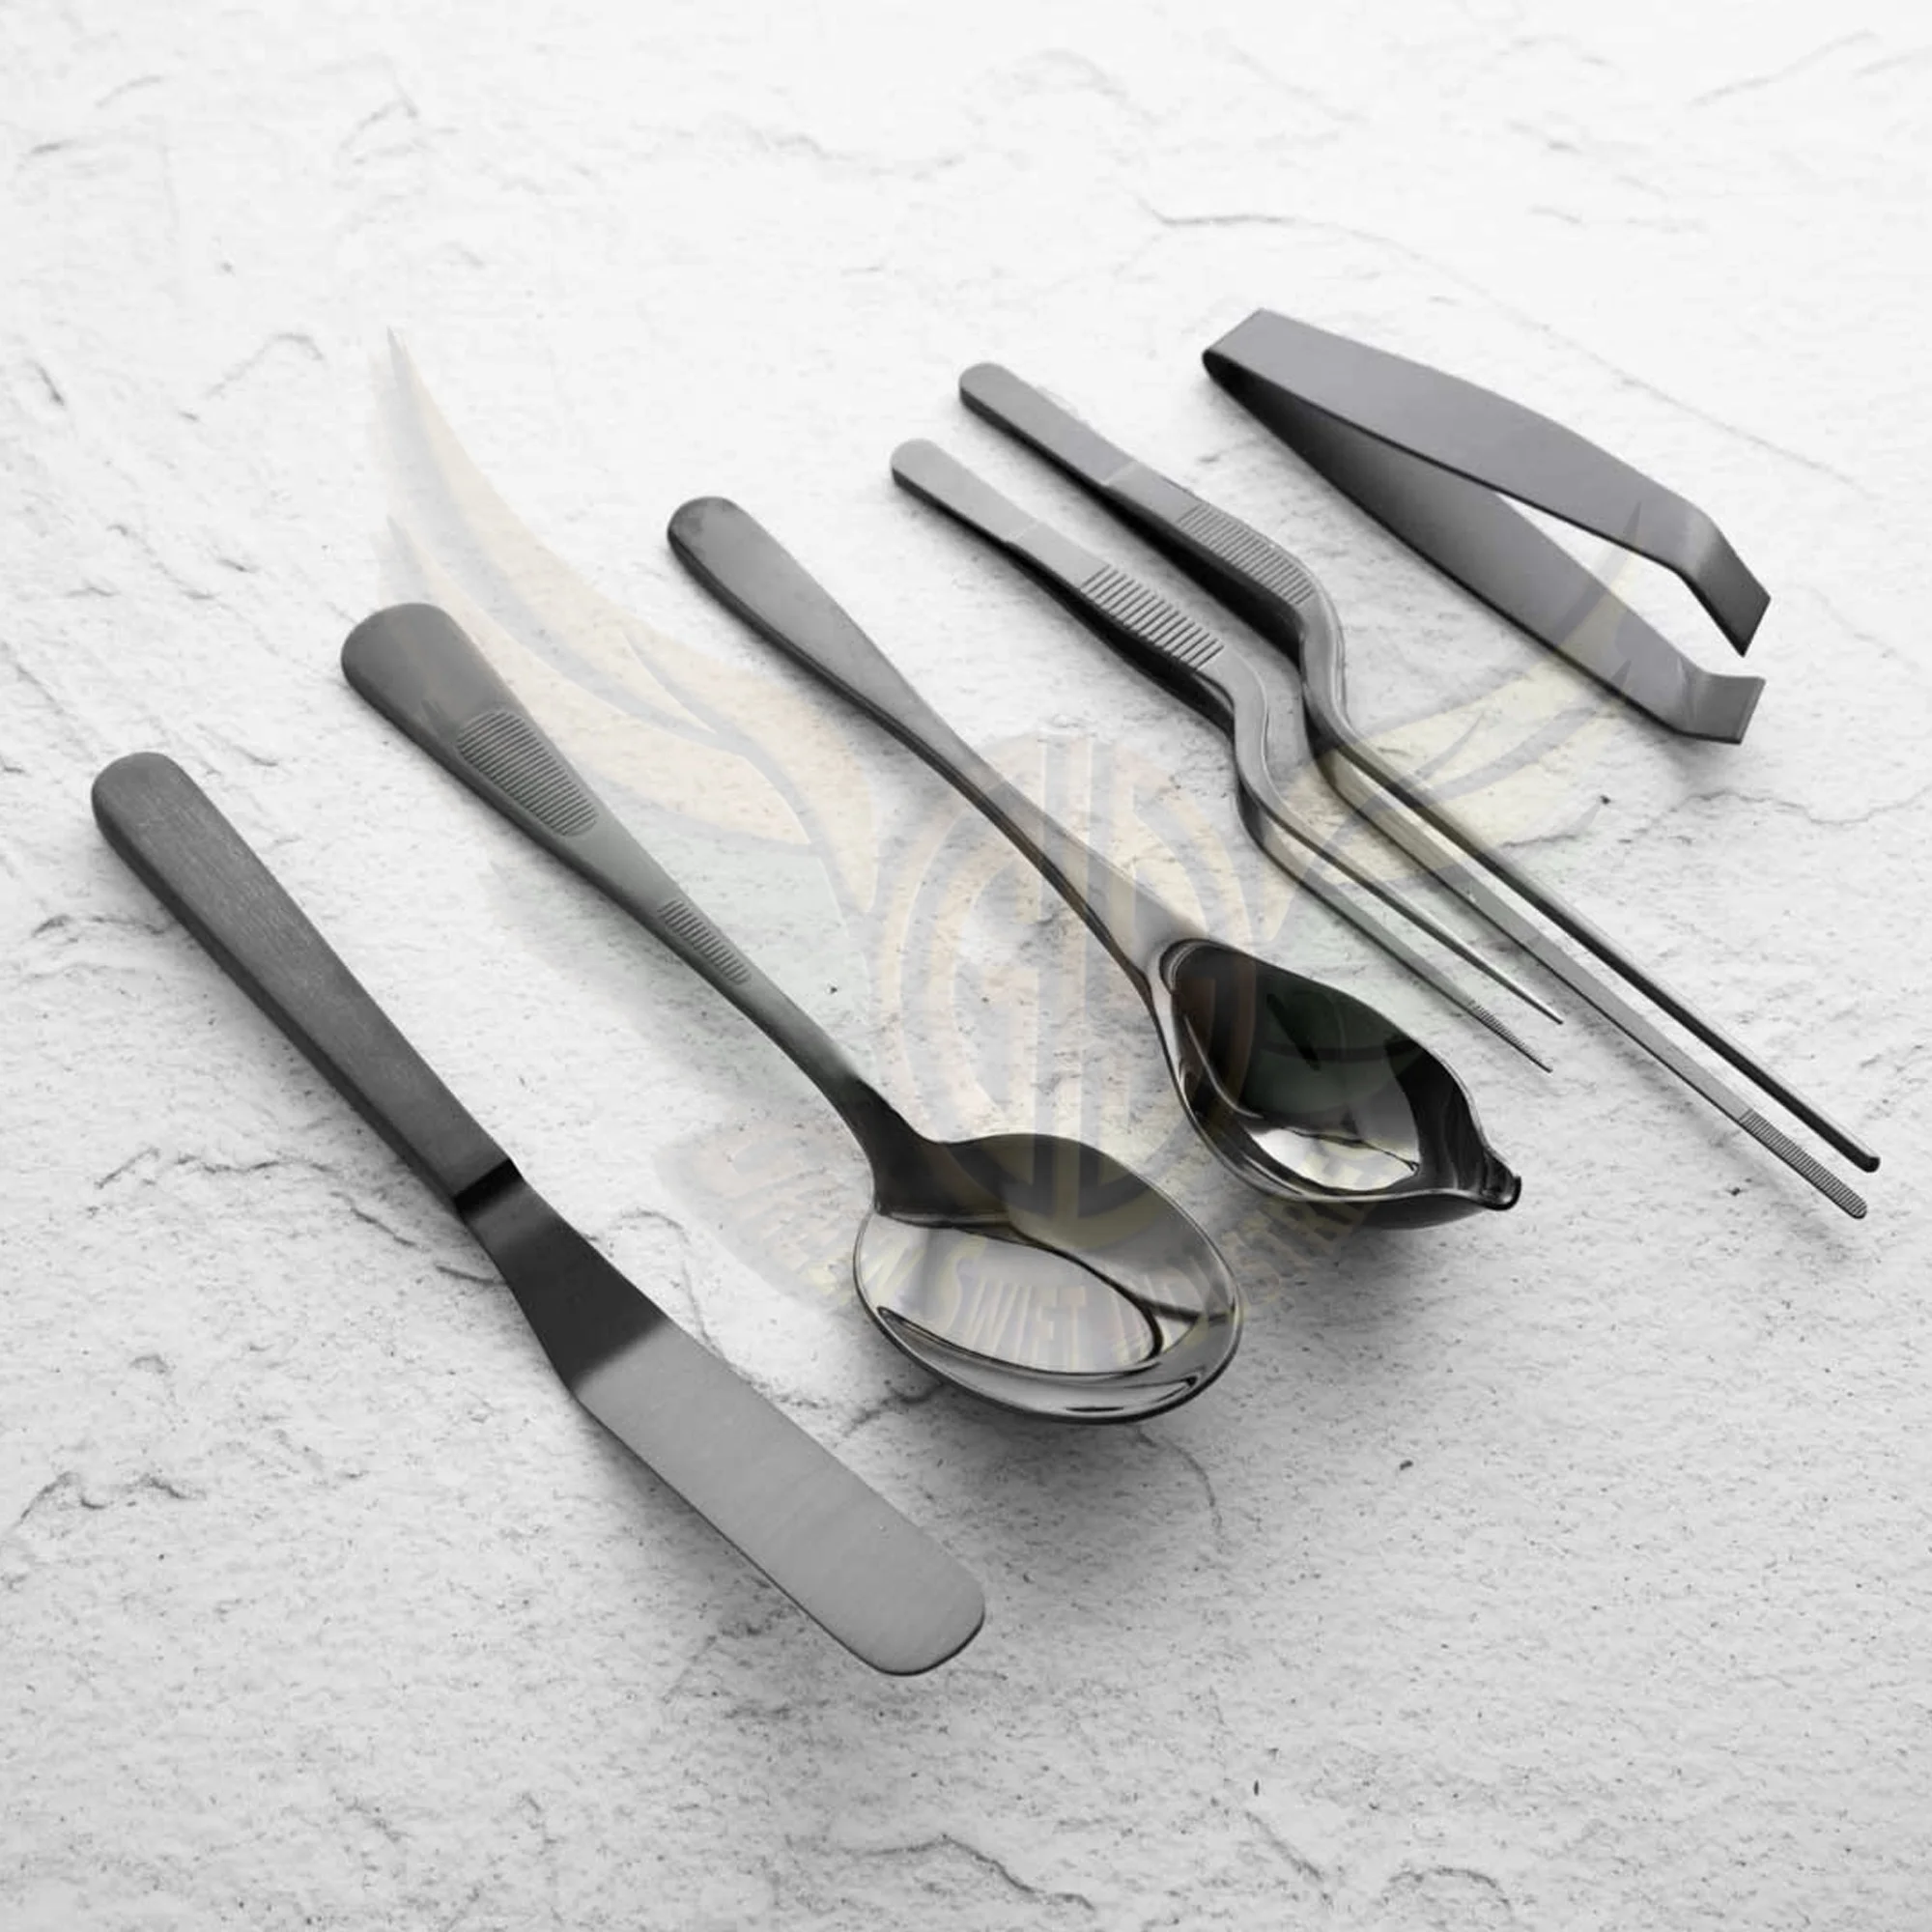 Plating Tools, Garnishing Kits & More, Cooks' Tools